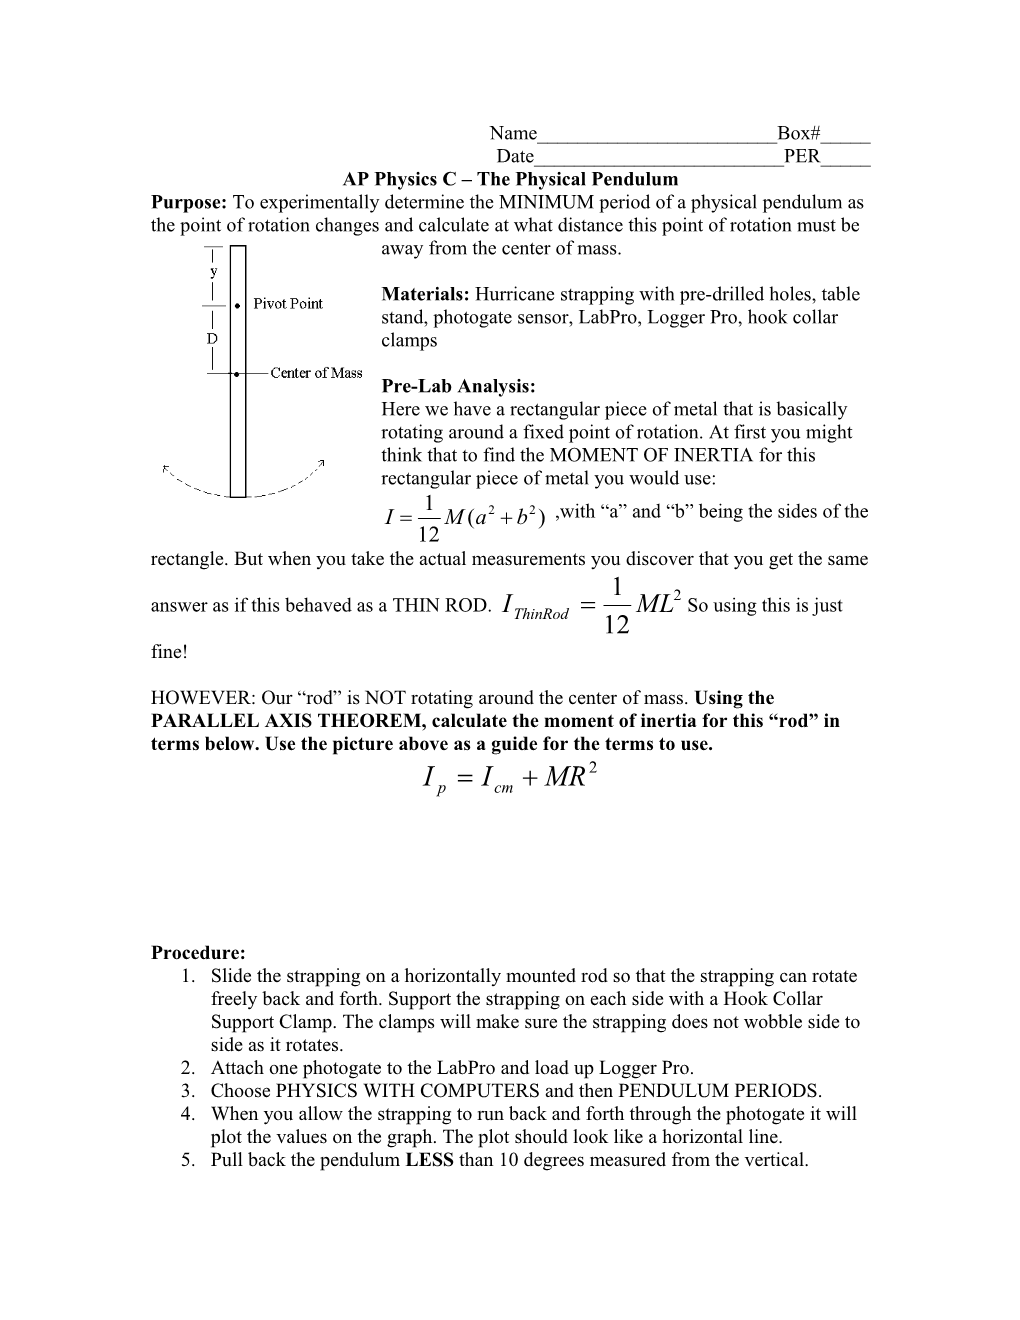 AP Physics C the Physical Pendulum